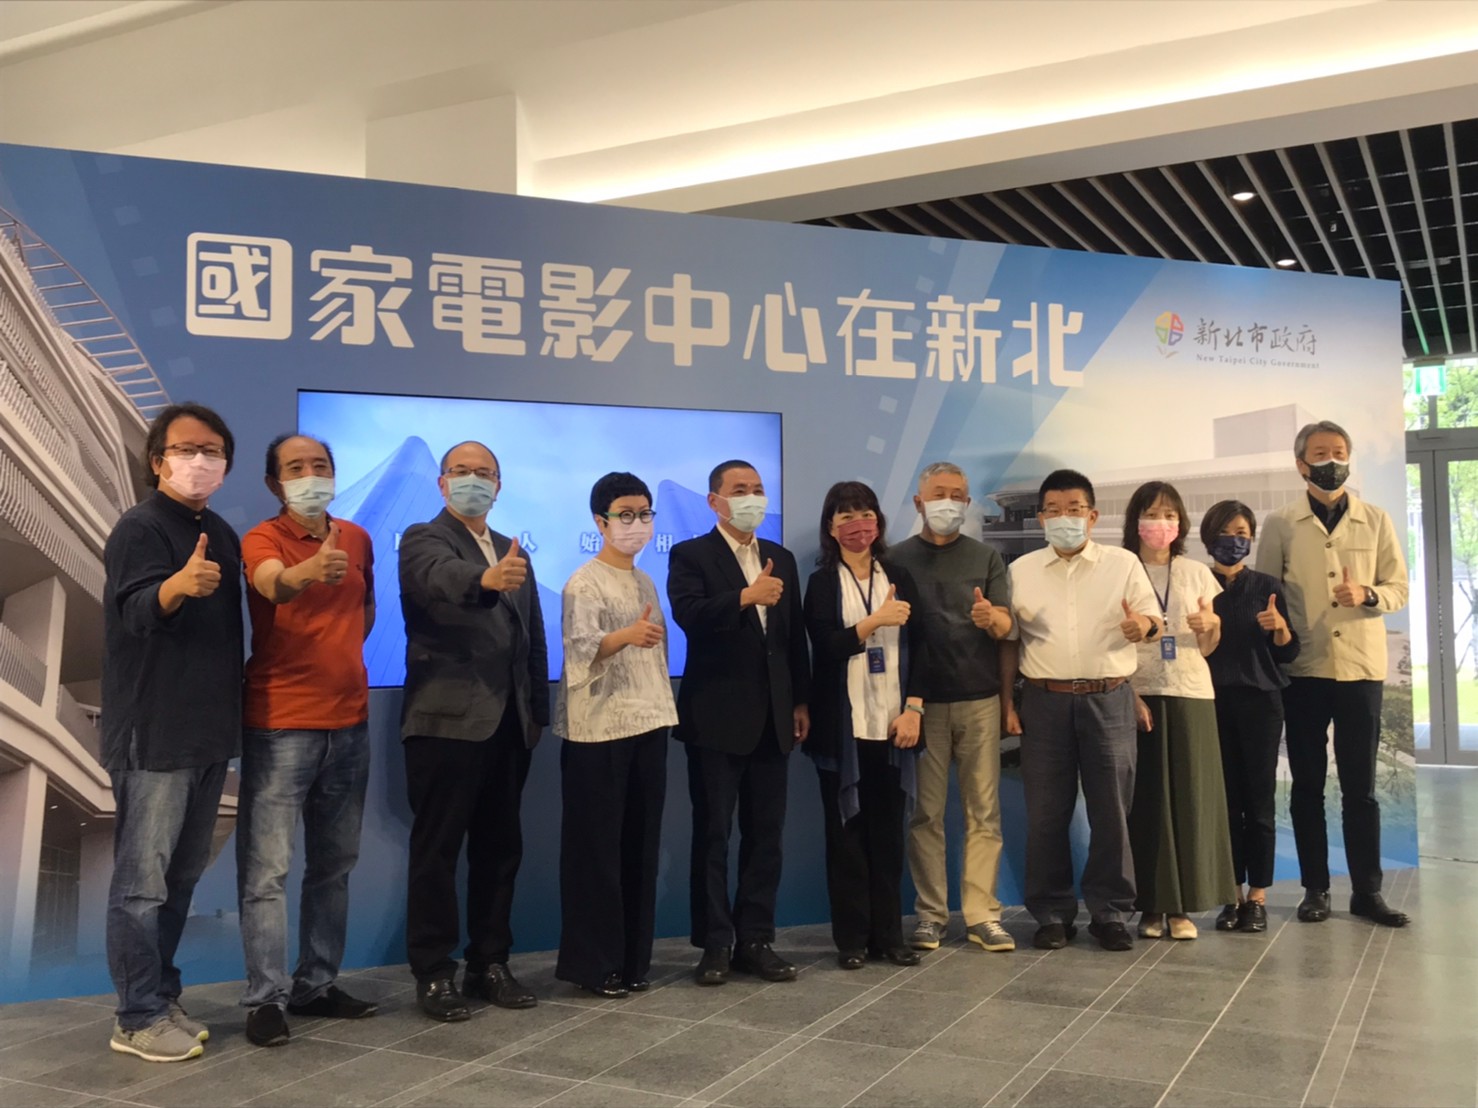 Taiwan Film Audiovisual Institute terletak di Xinzhuang untuk mendorong perkembangan ekonomi budaya. Sumber: Kementerian Kebudayaan